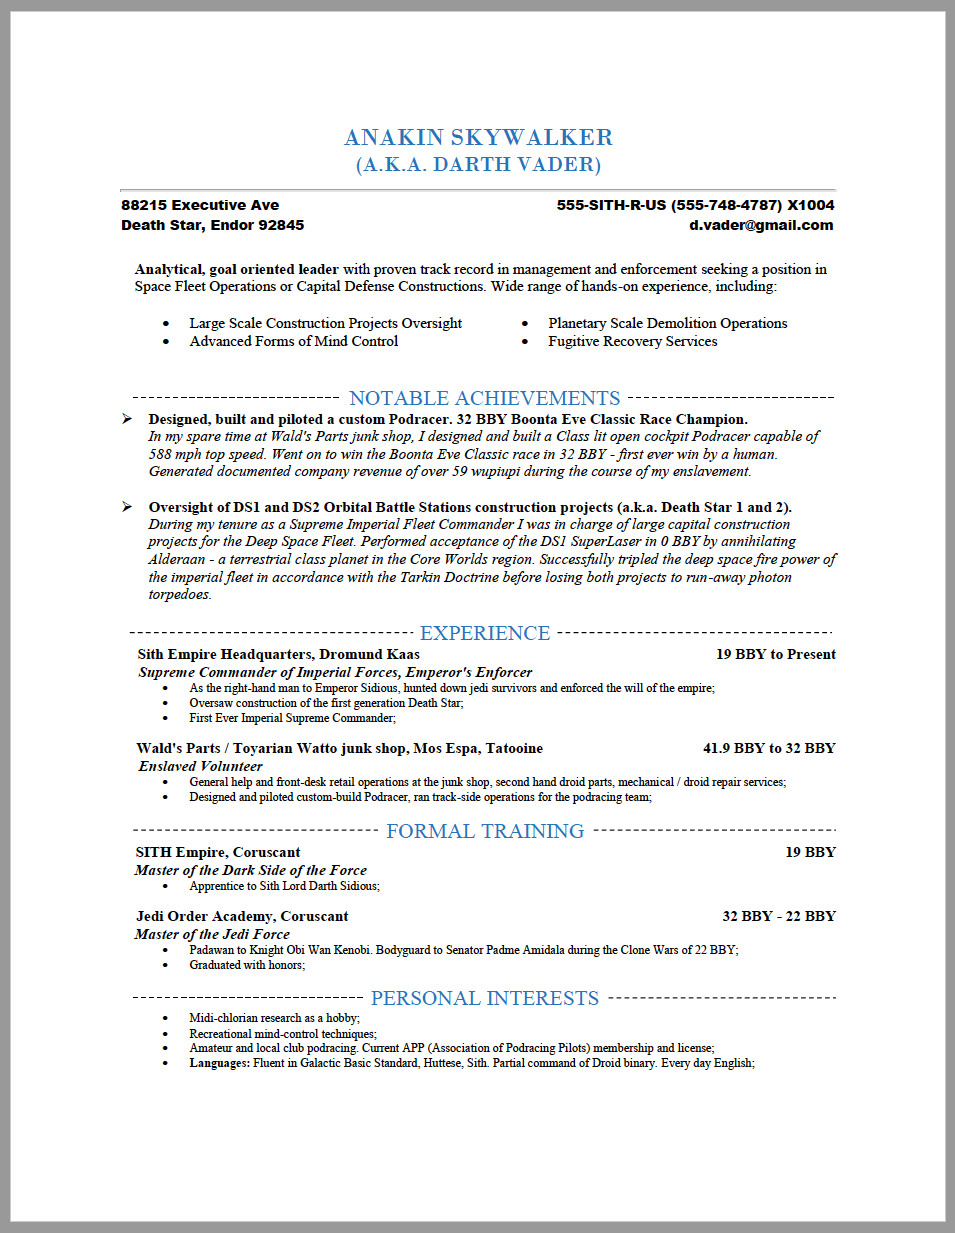 Scholarship resume